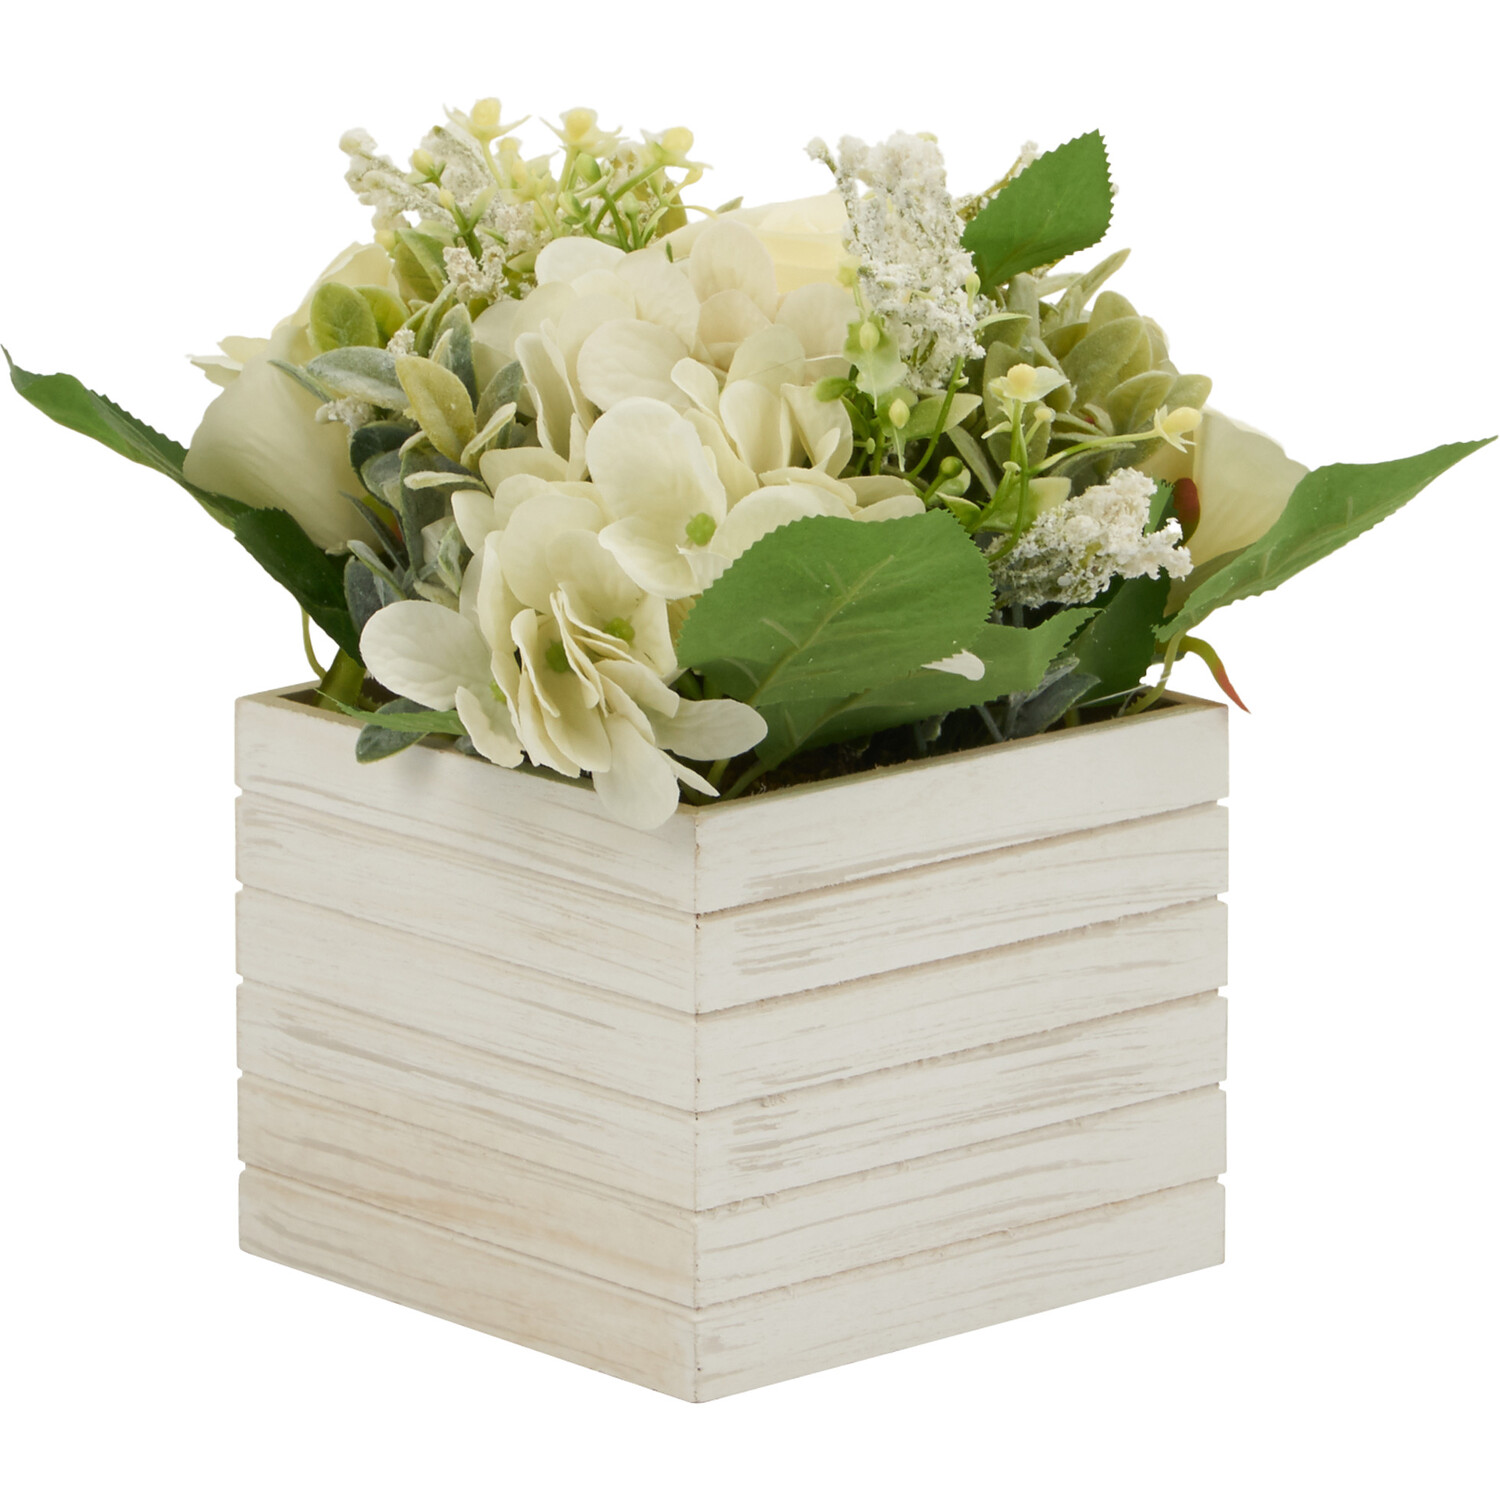 White Rose & Hydrangea Floral Box - White Image 1